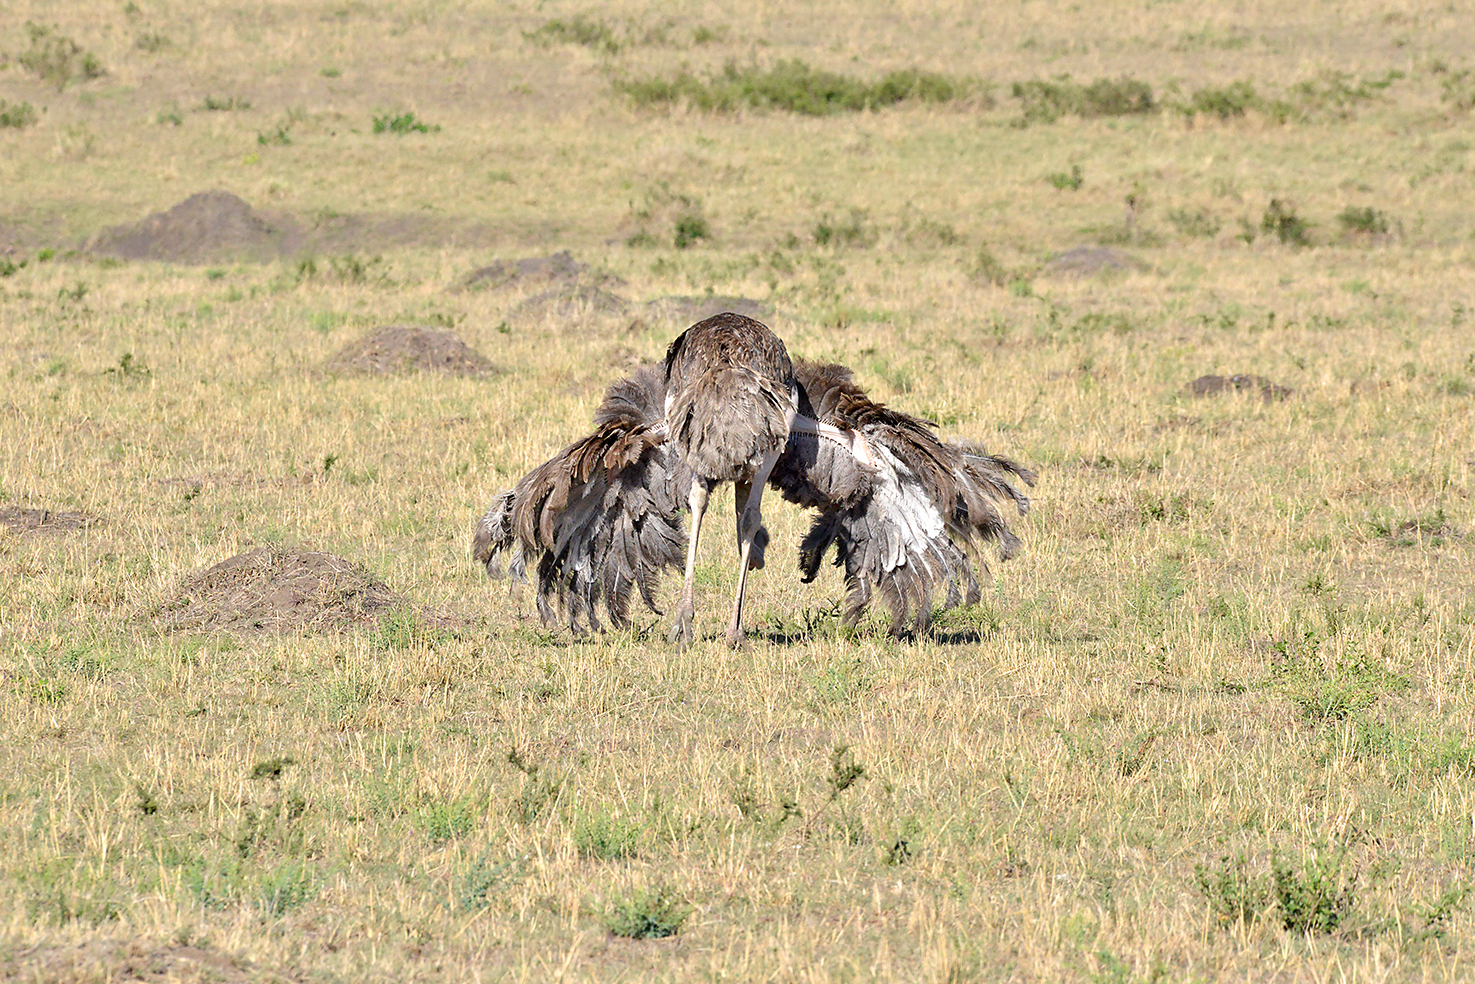 072 Masai Mara 1